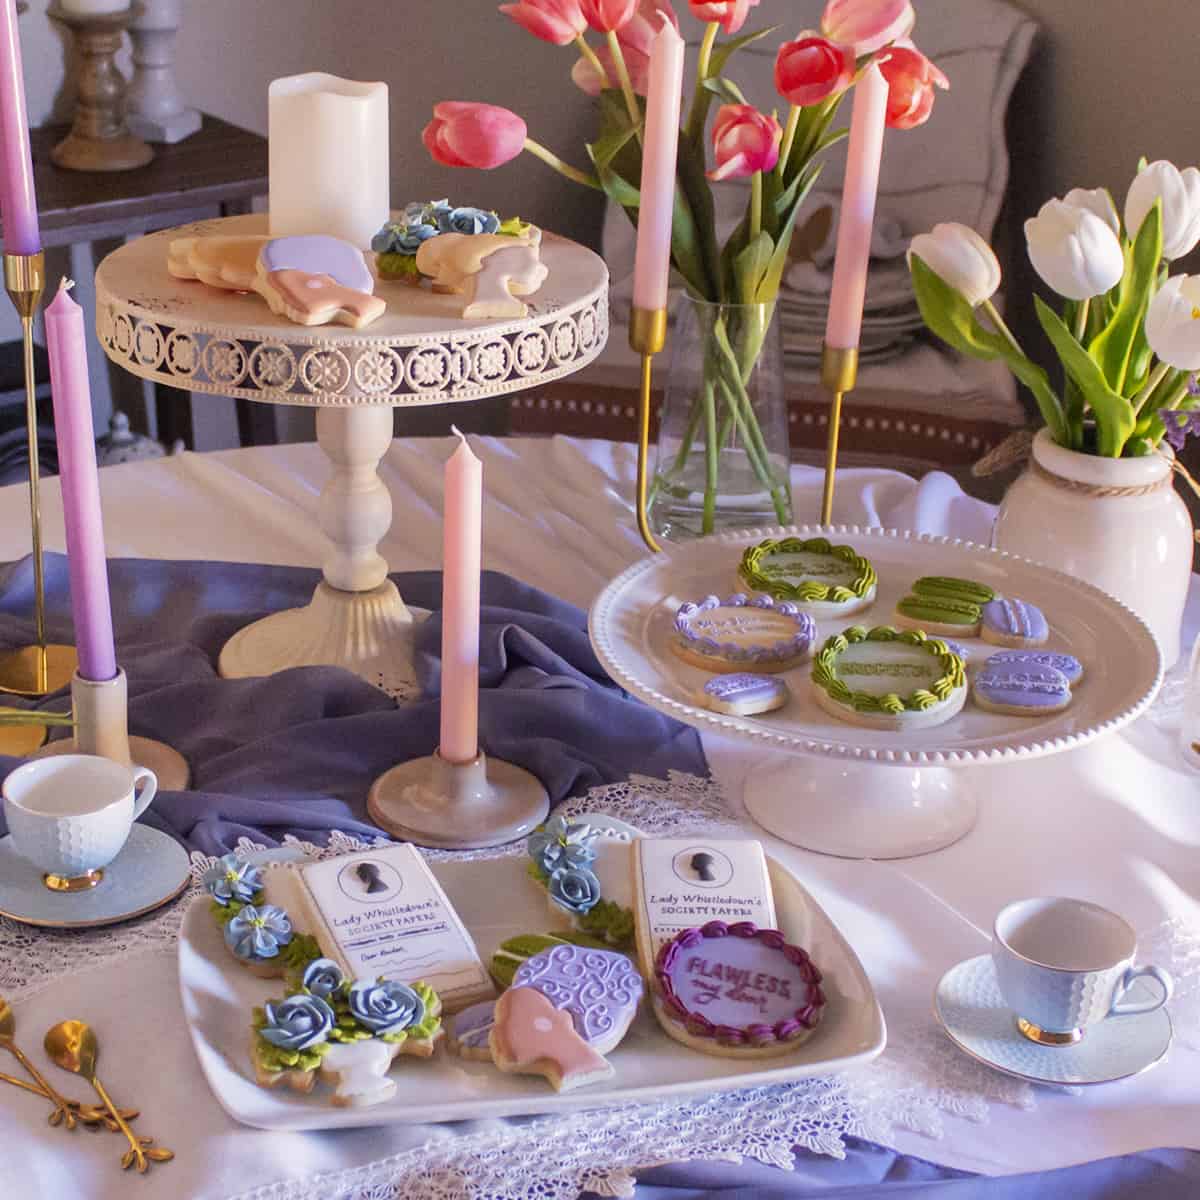 Bridgerton-inspired royal icing cookies displayed on table